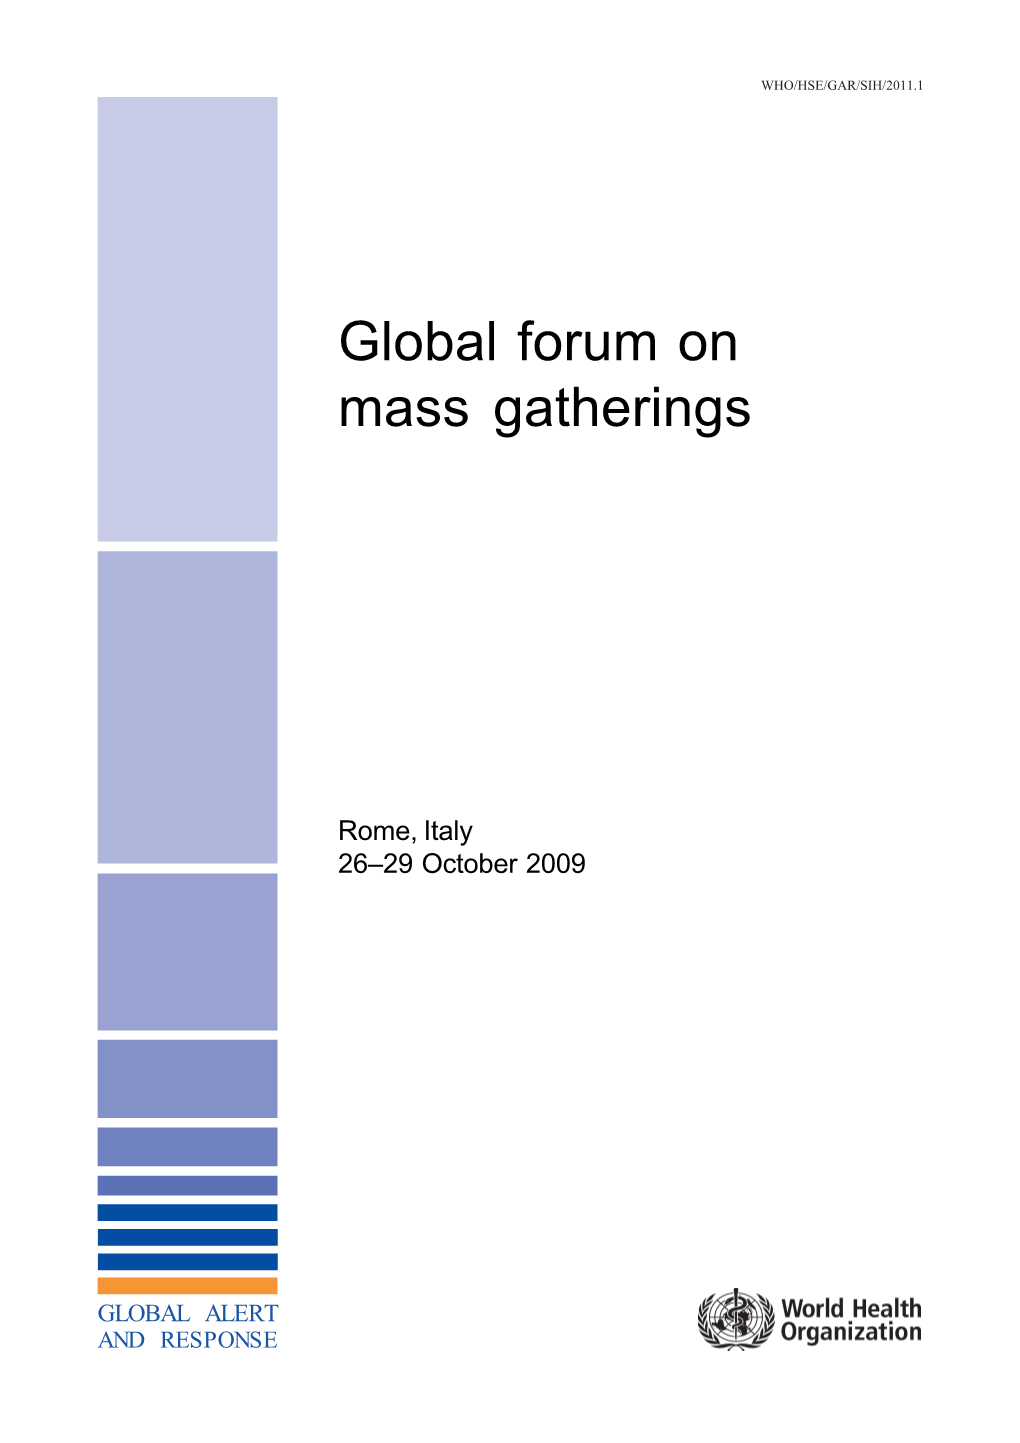 Global Forum on Mass Gatherings